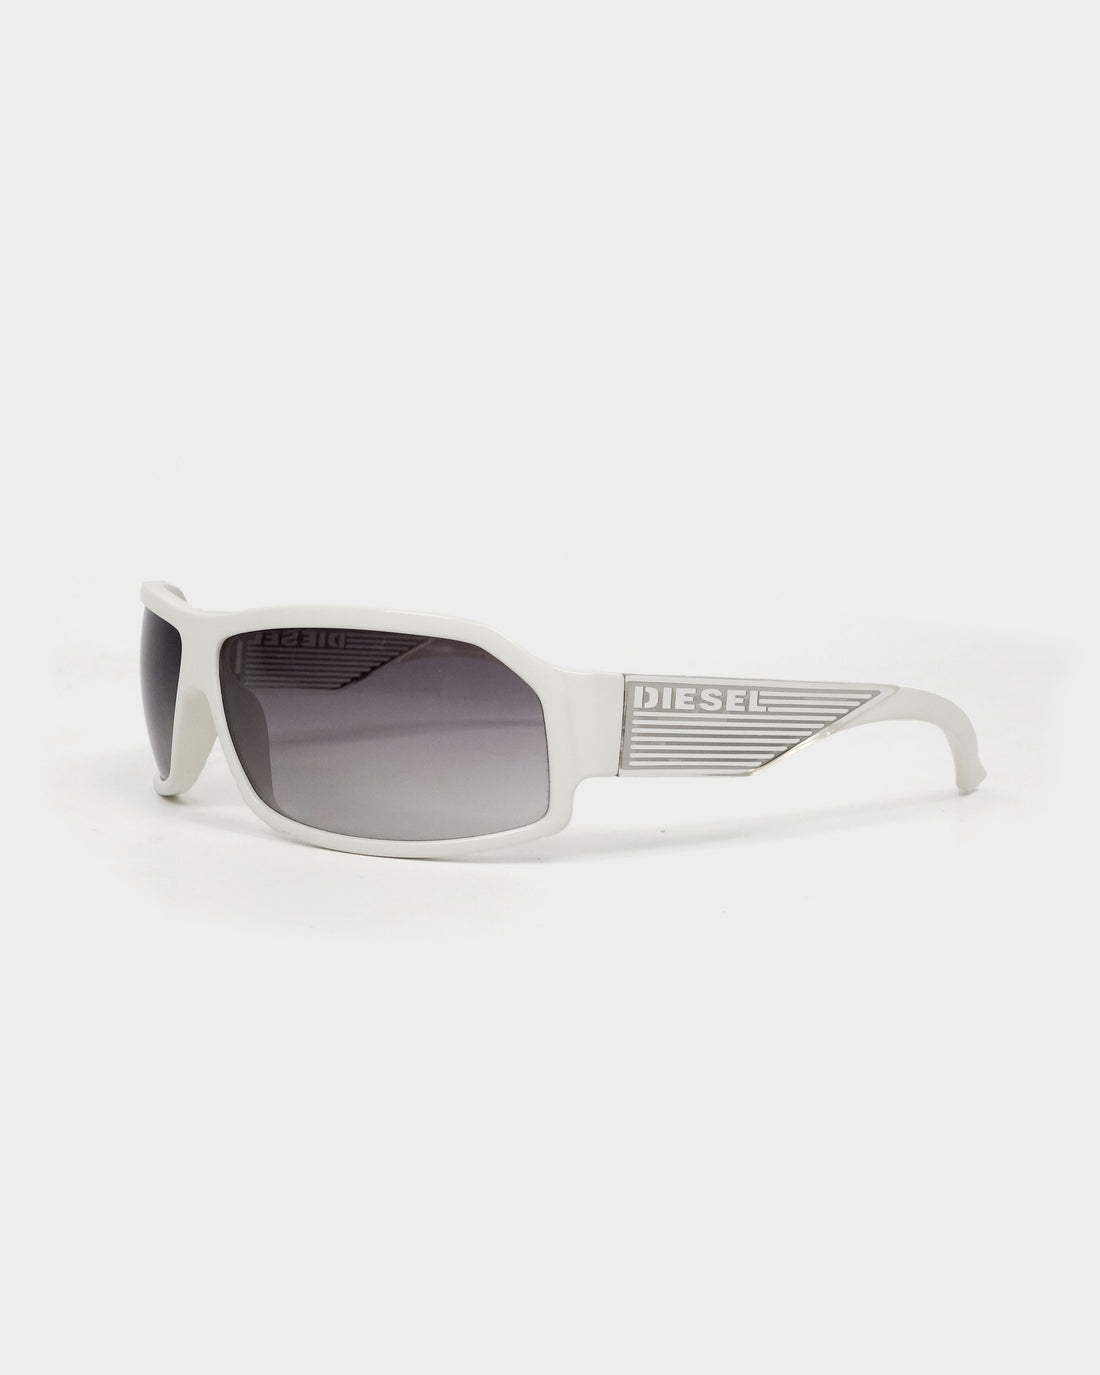 Diesel White Transparent Sunglasses 2000's